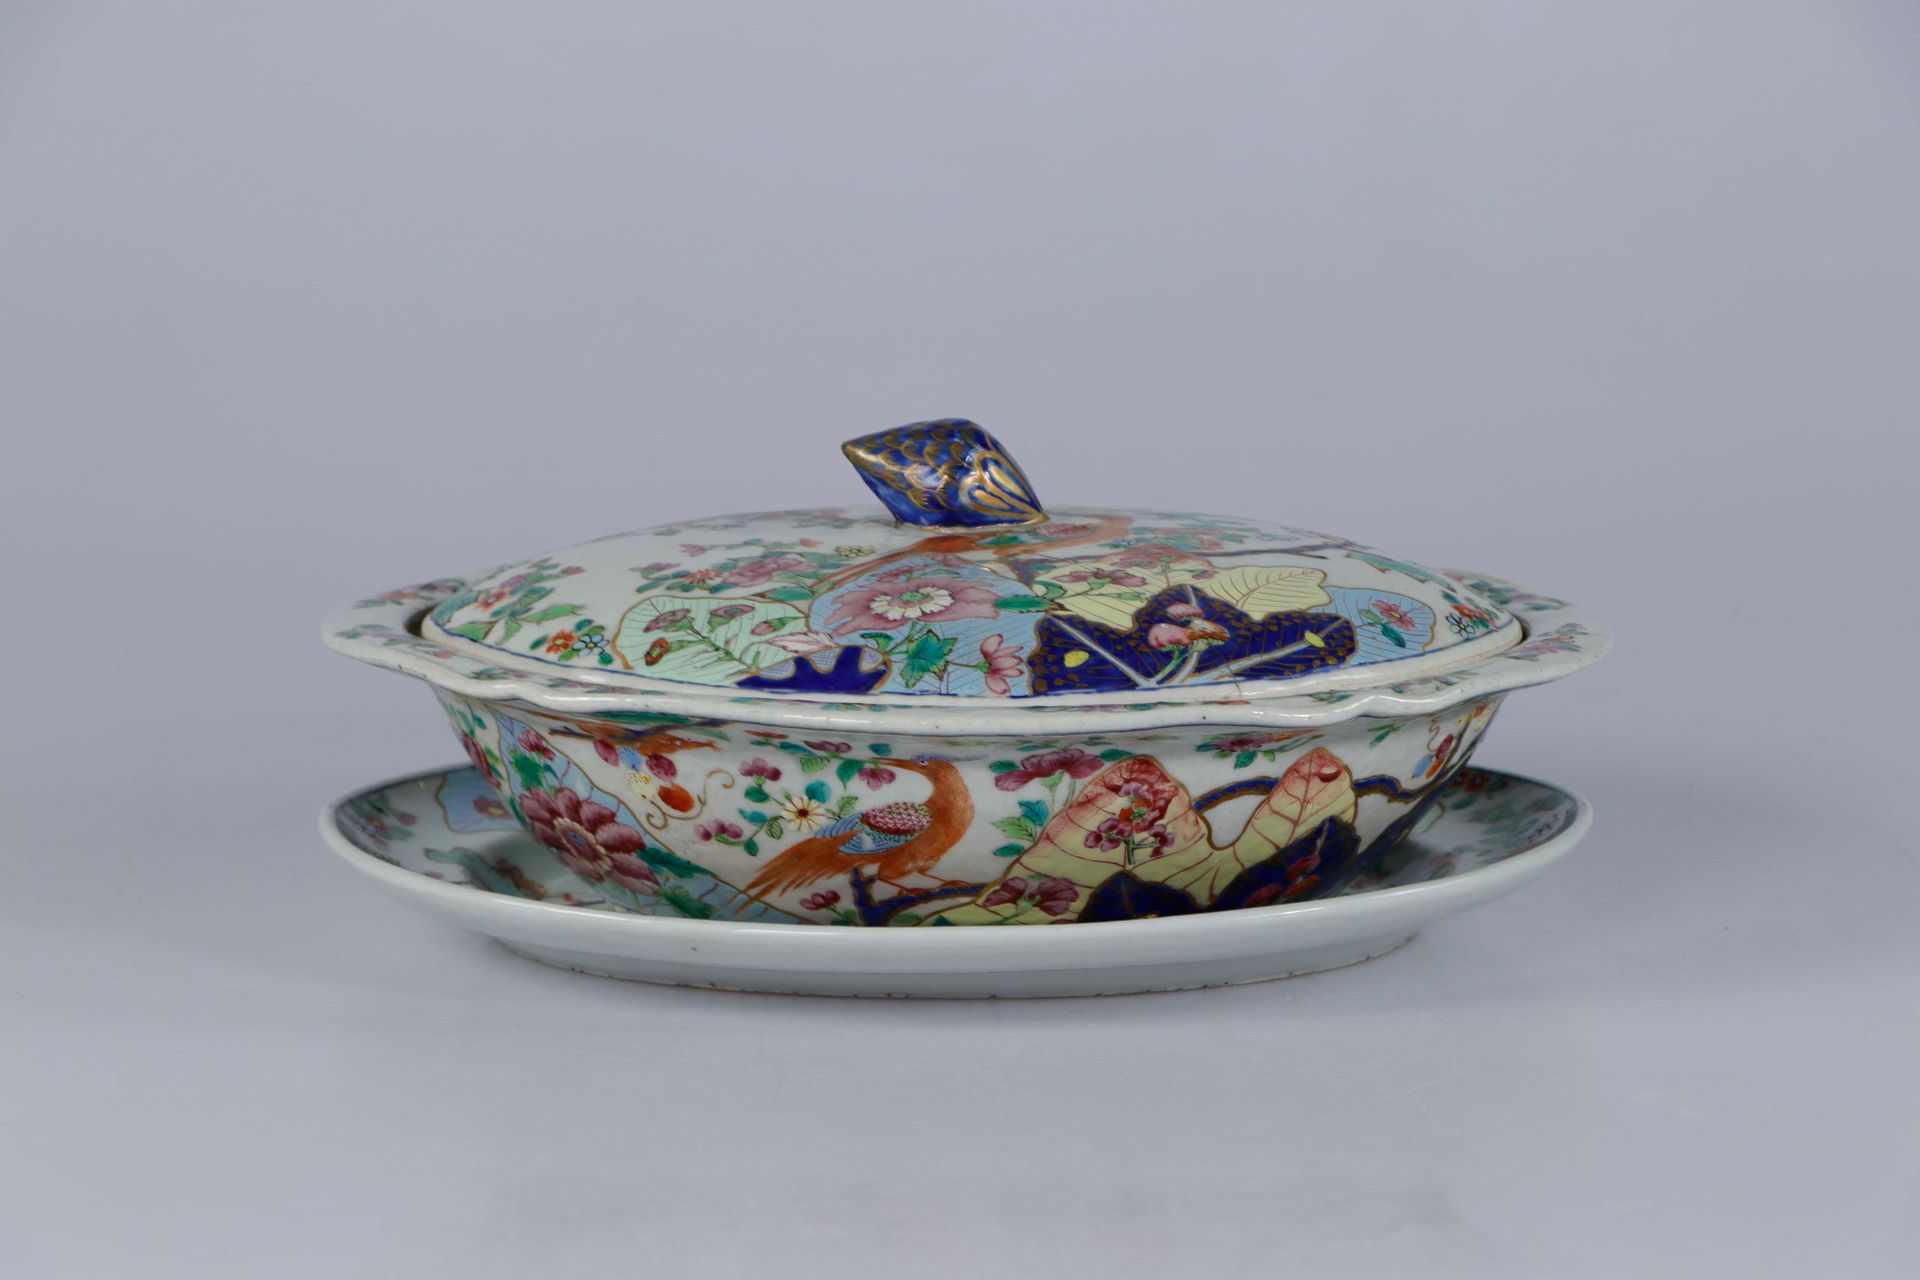 Null *中国，Compagnie des Indes，18世纪。瓷器覆盖的瓦罐和它的框架有 "烟叶 "装饰，用多色珐琅彩画出鸟类、睡鼠和植物，握柄由松果形成&hellip;